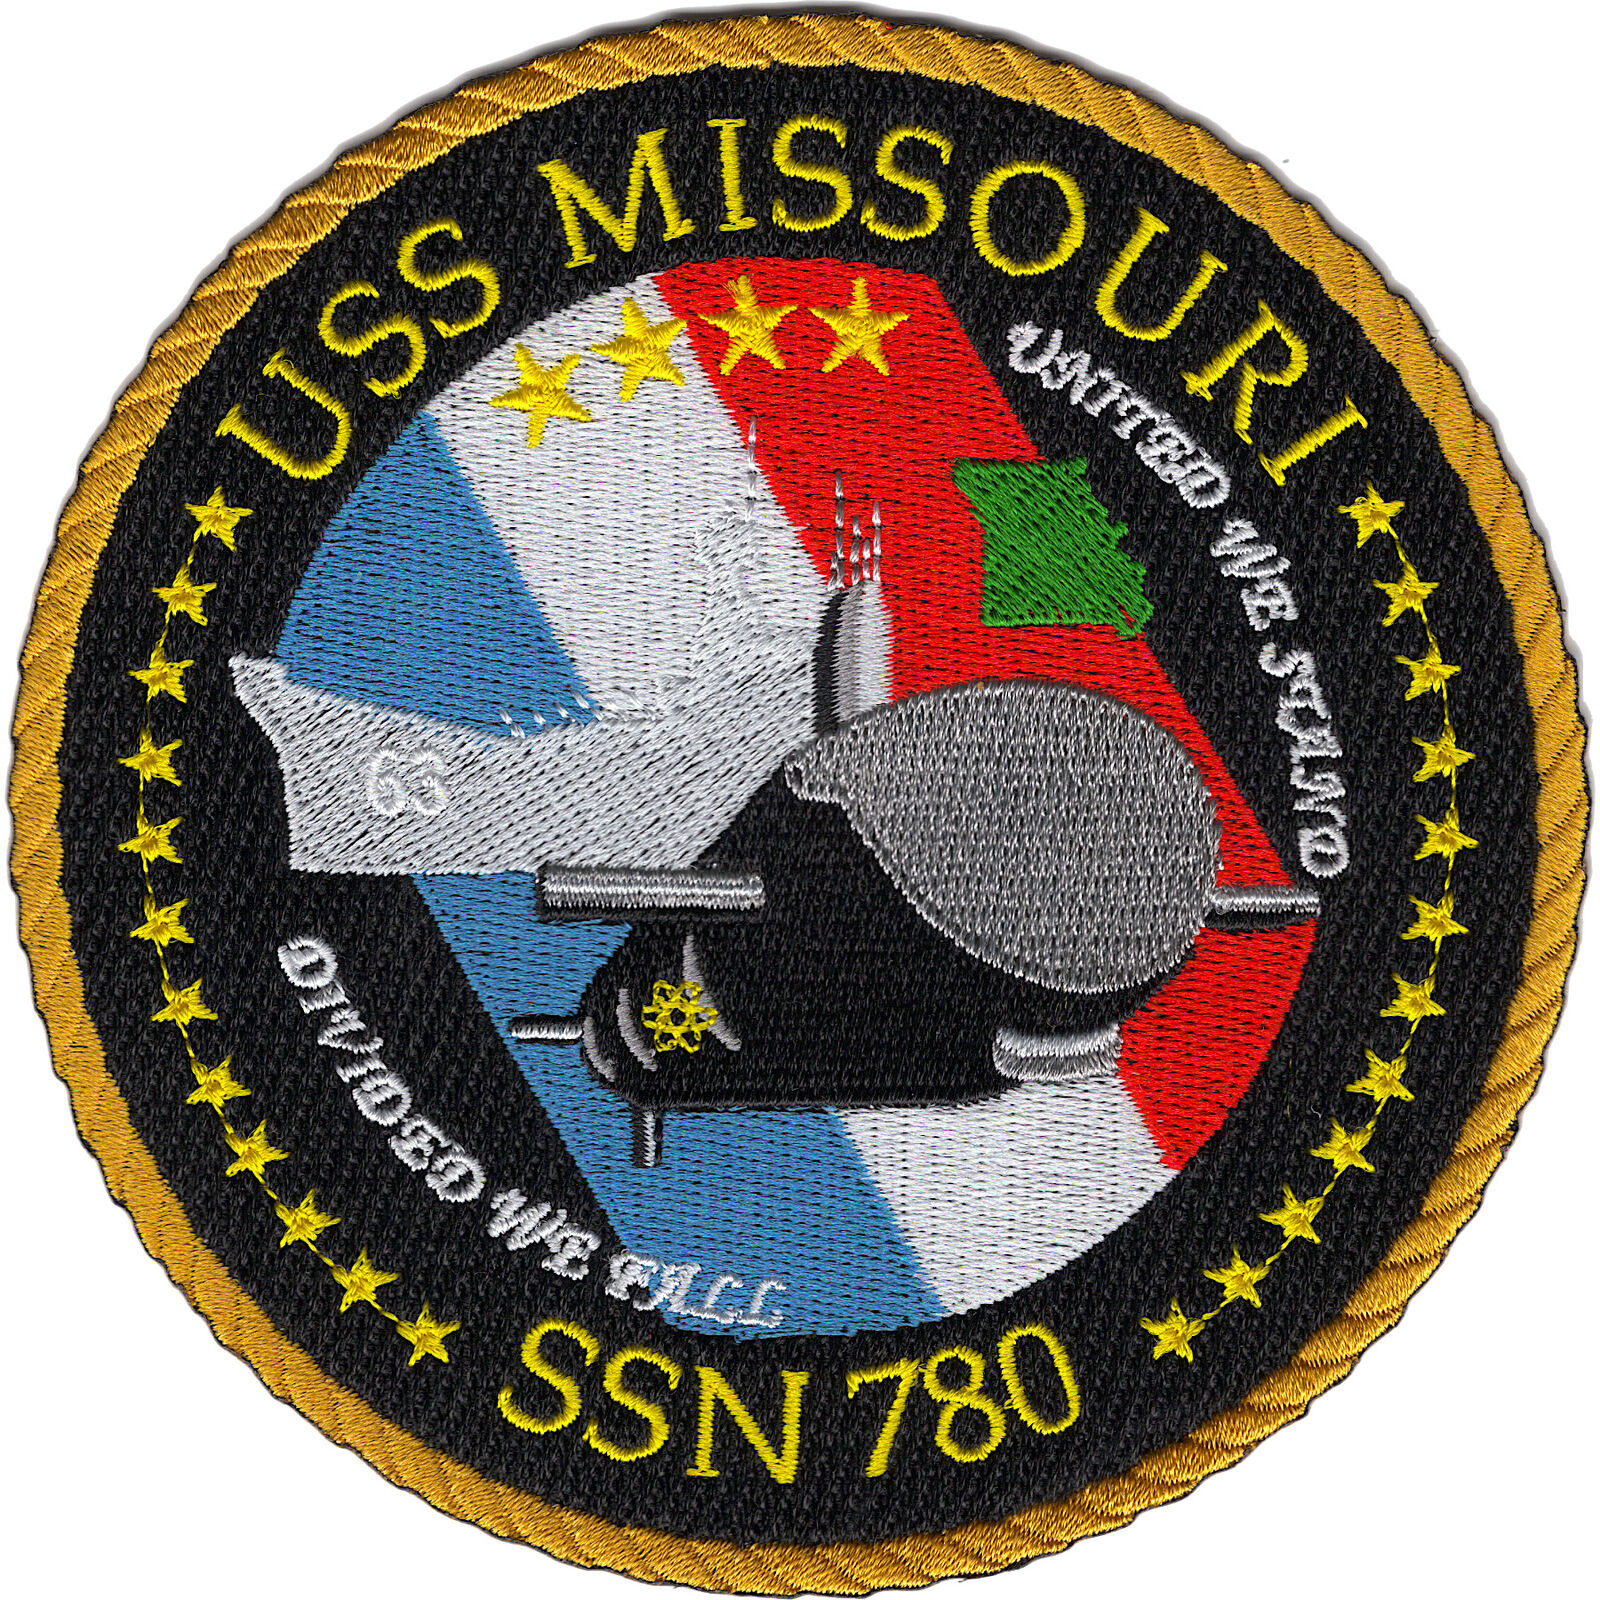 SSN-780 USS Missouri Patch